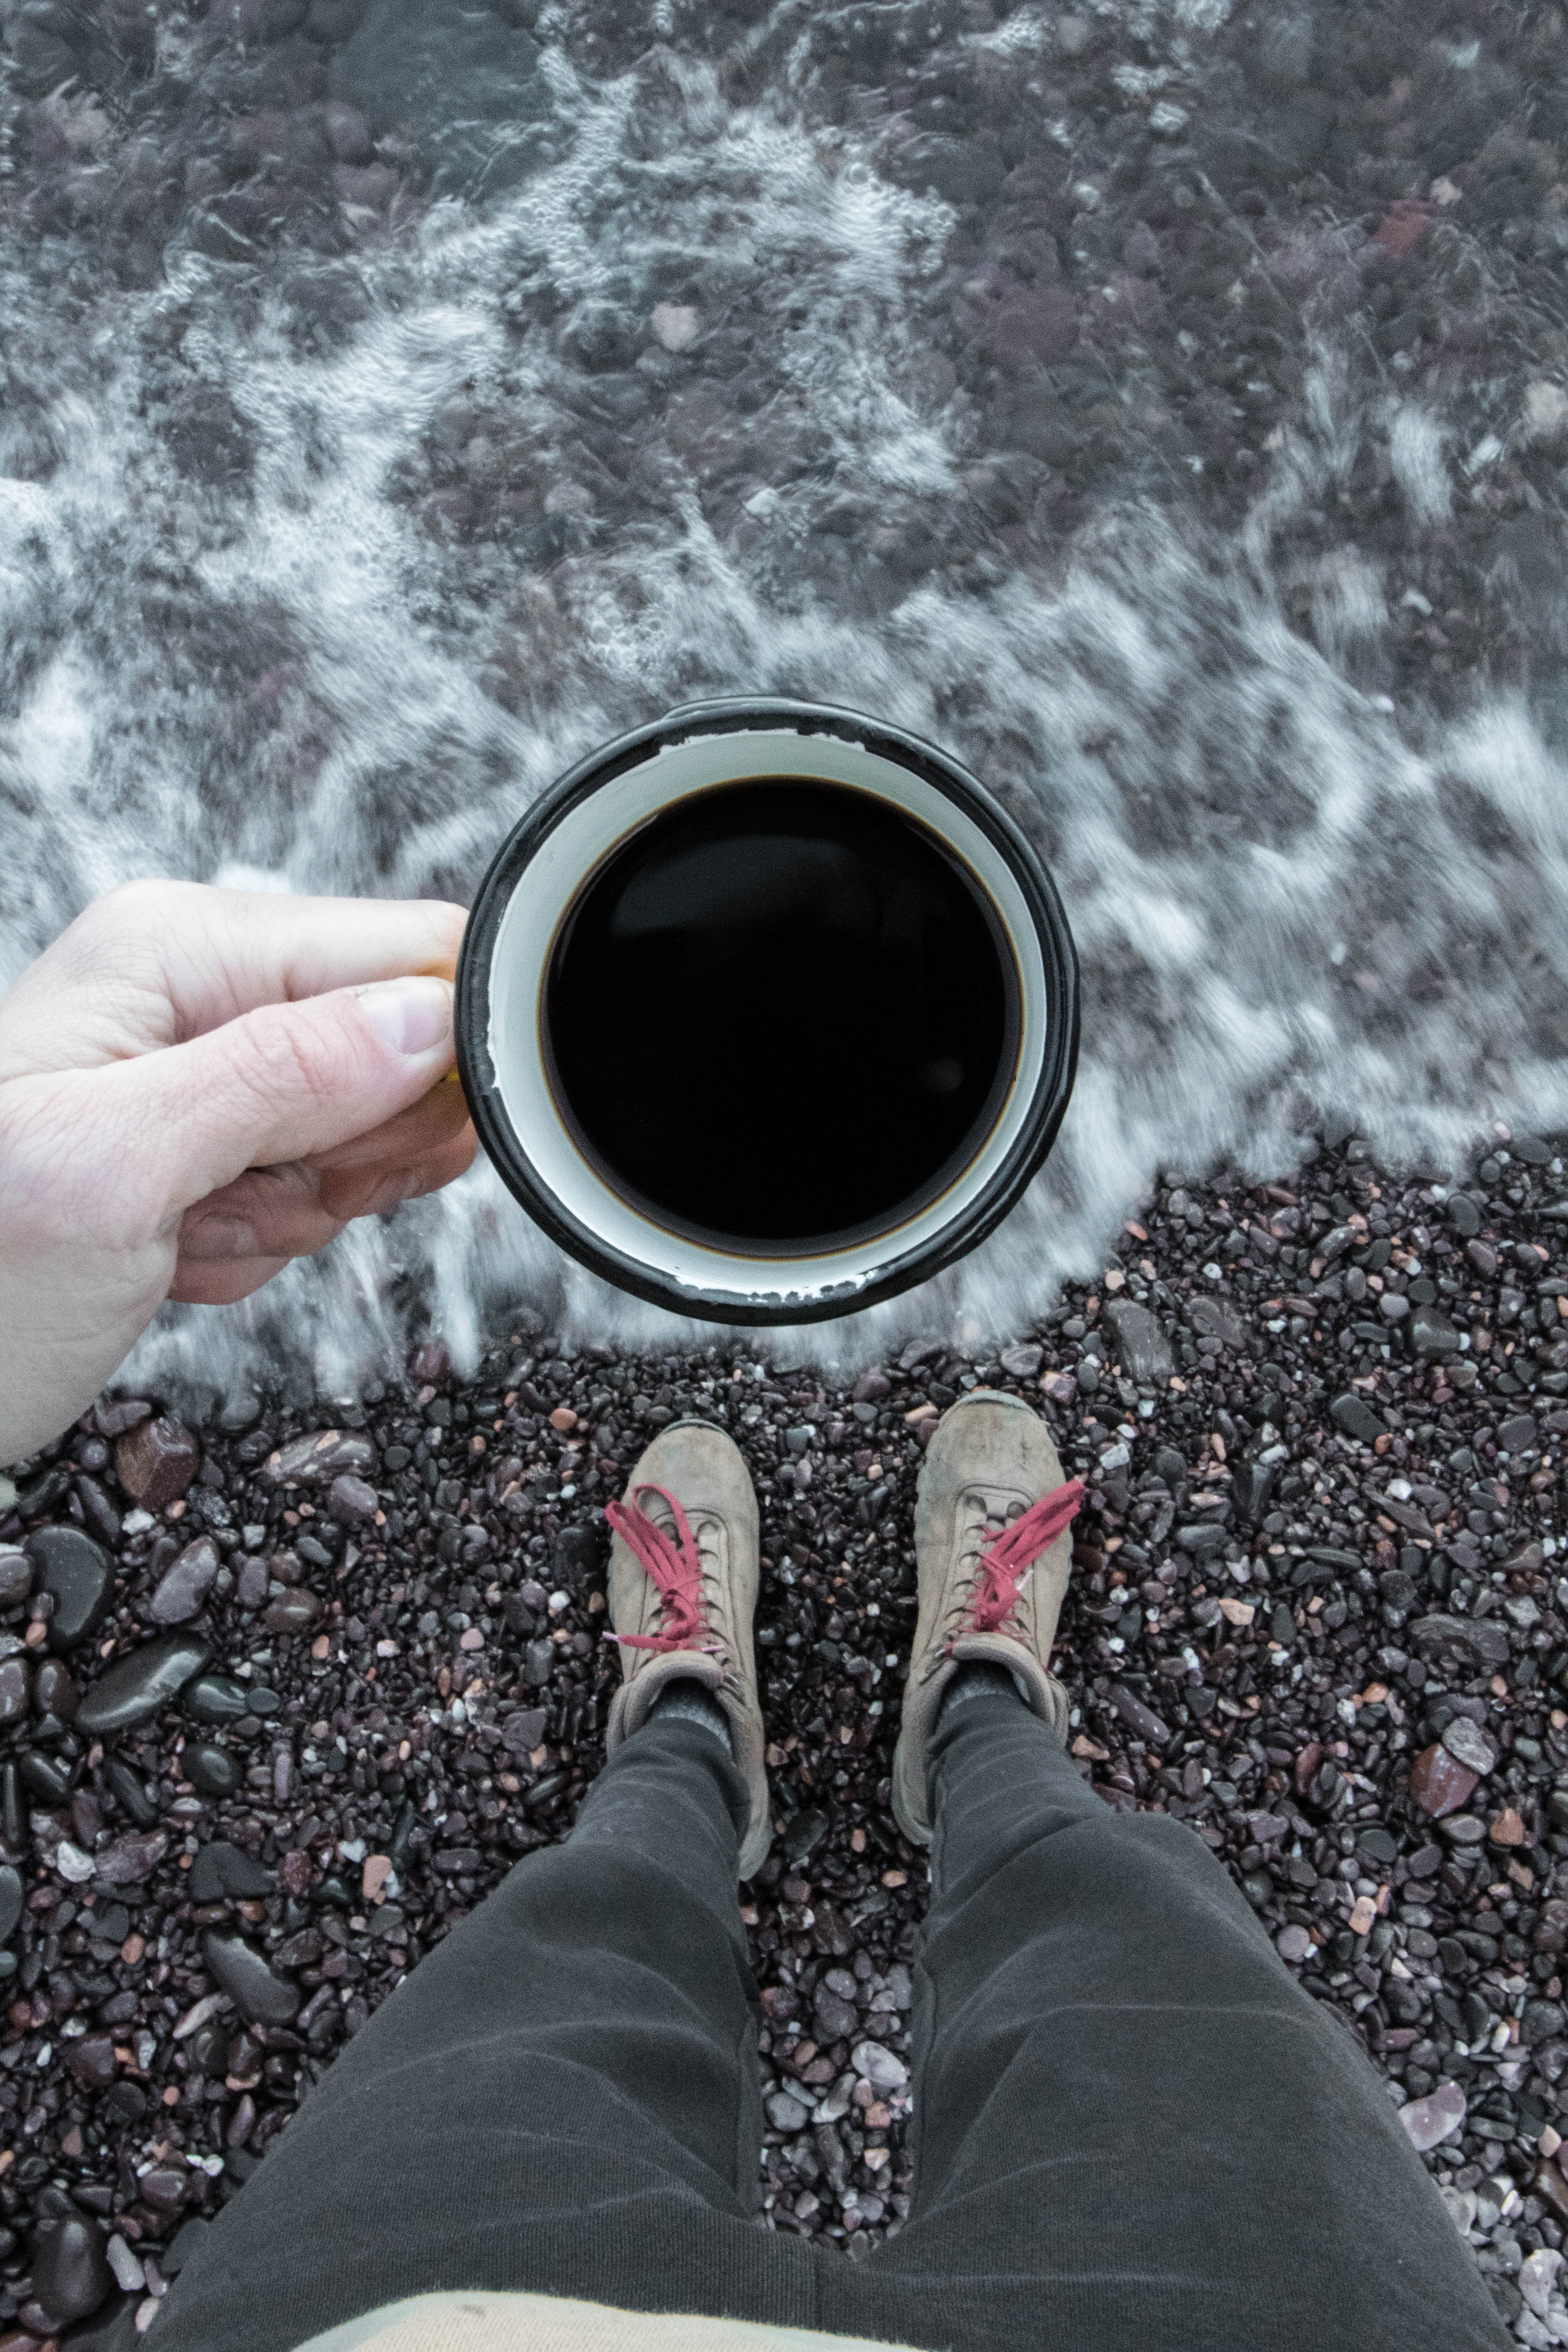 pebble, sea, coffee, hand, miscellanea, miscellaneous, legs, cup